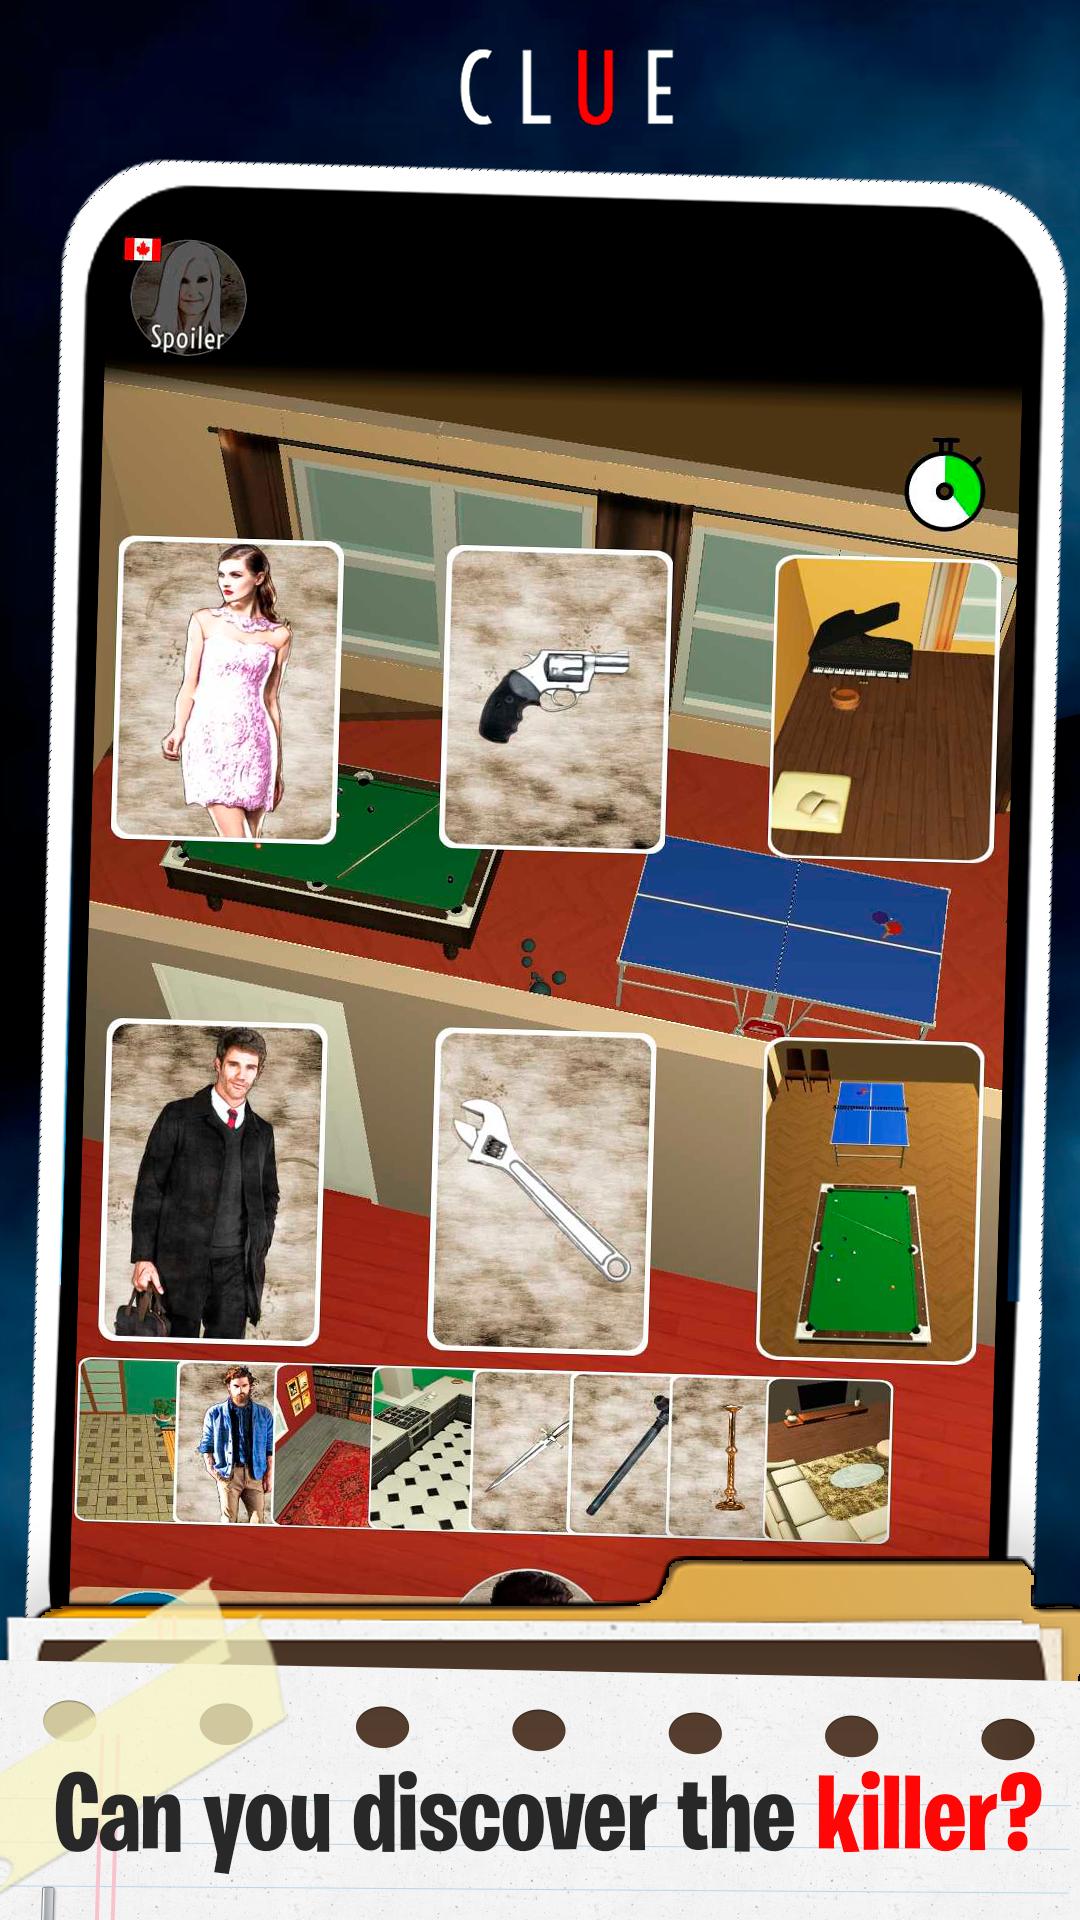 Clue Detective mystery murder criminal board game 2.3 Screenshot 13